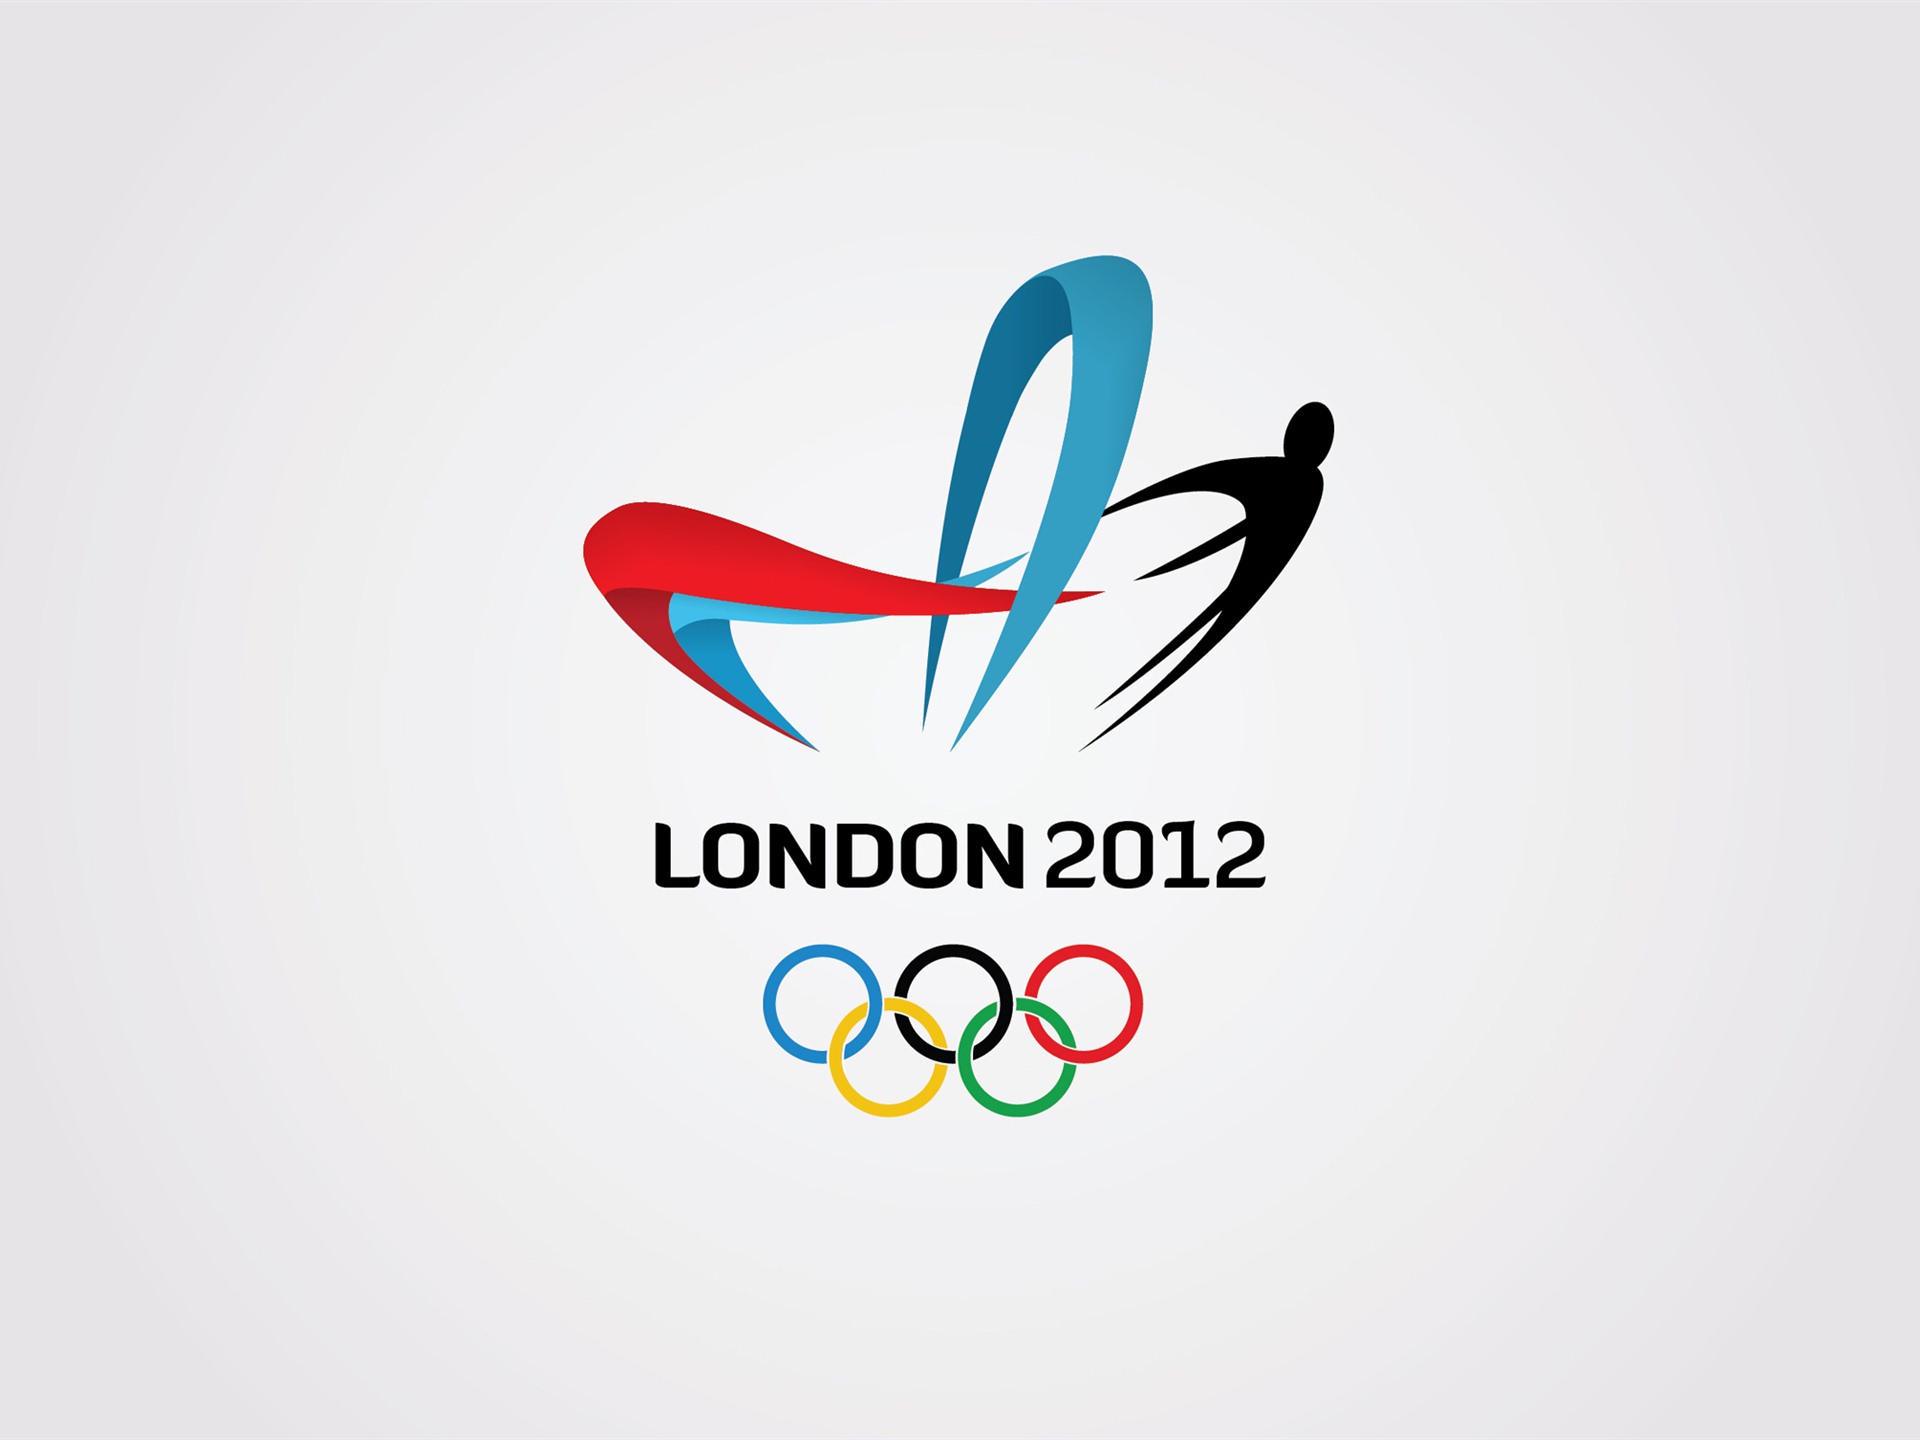 London 2012 Olympics theme wallpapers (2) #25 - 1920x1440